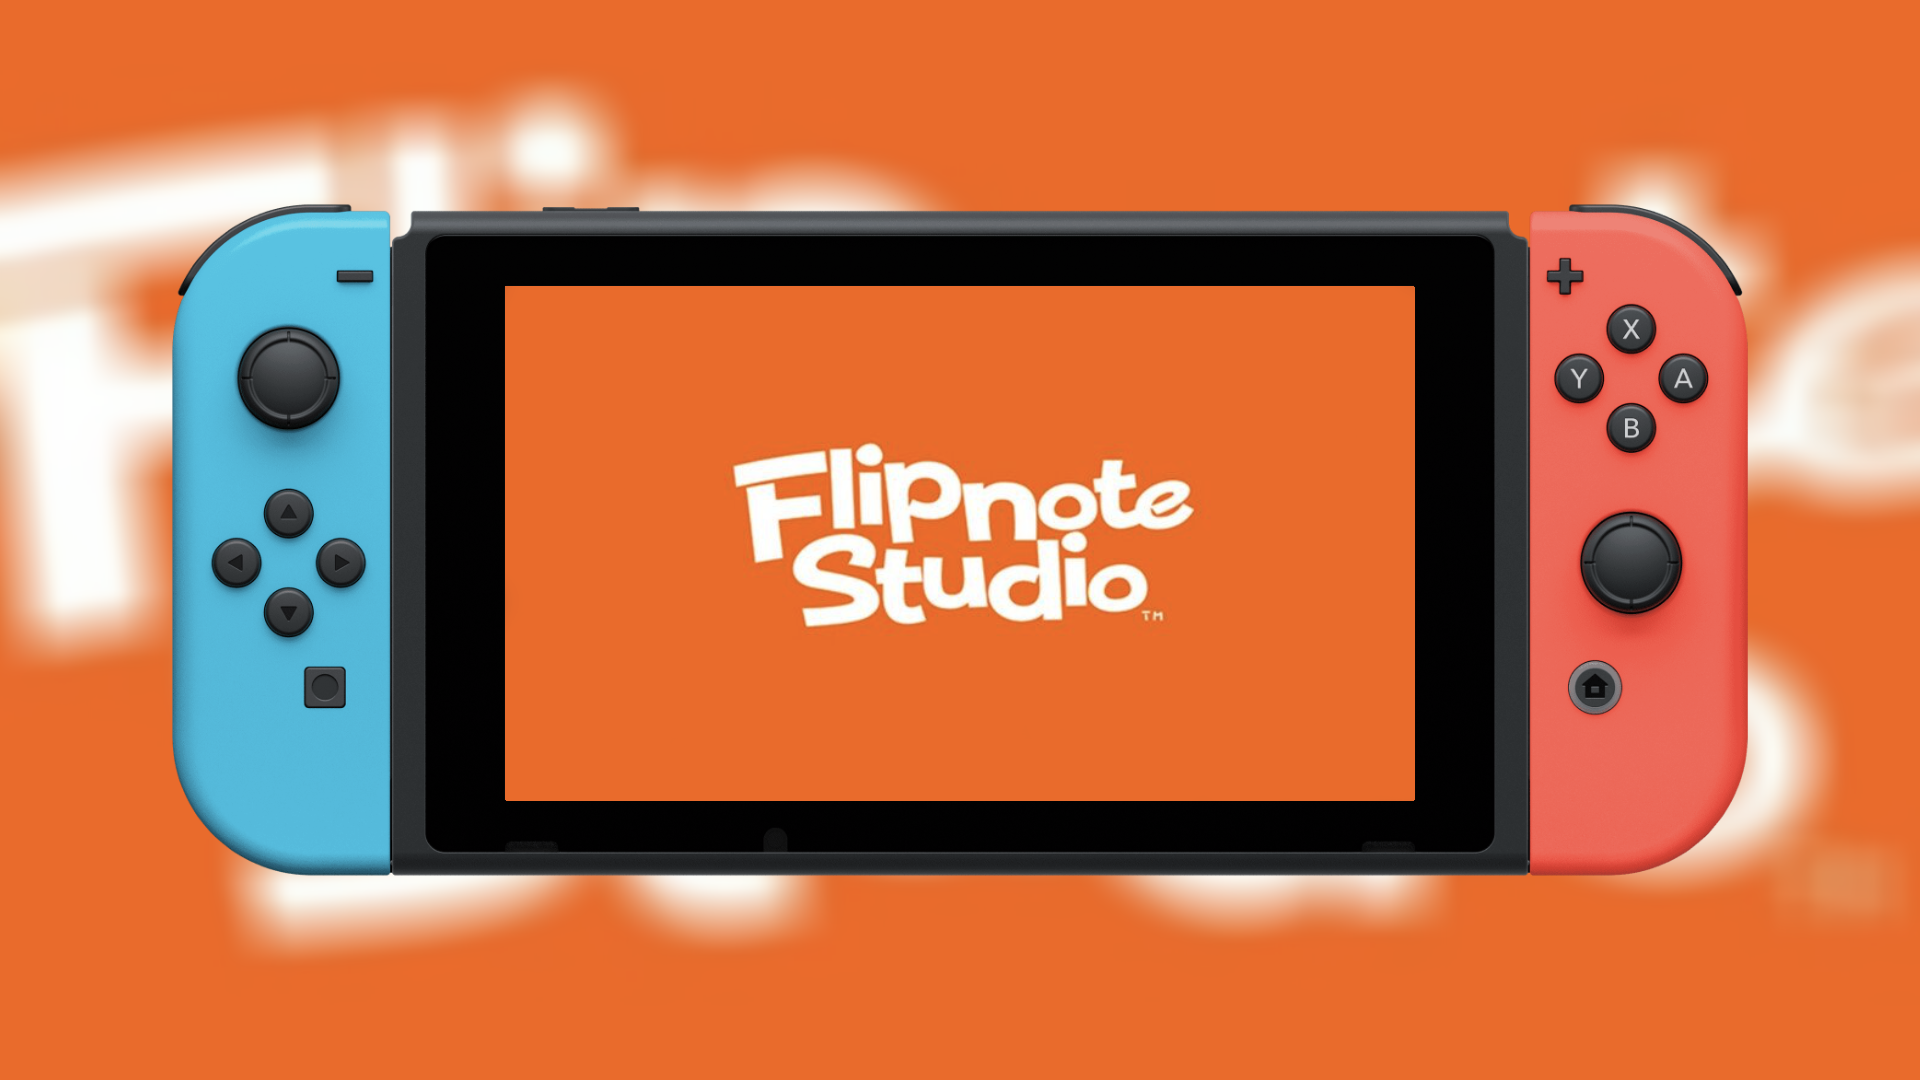 flipnote studio download dsi rom